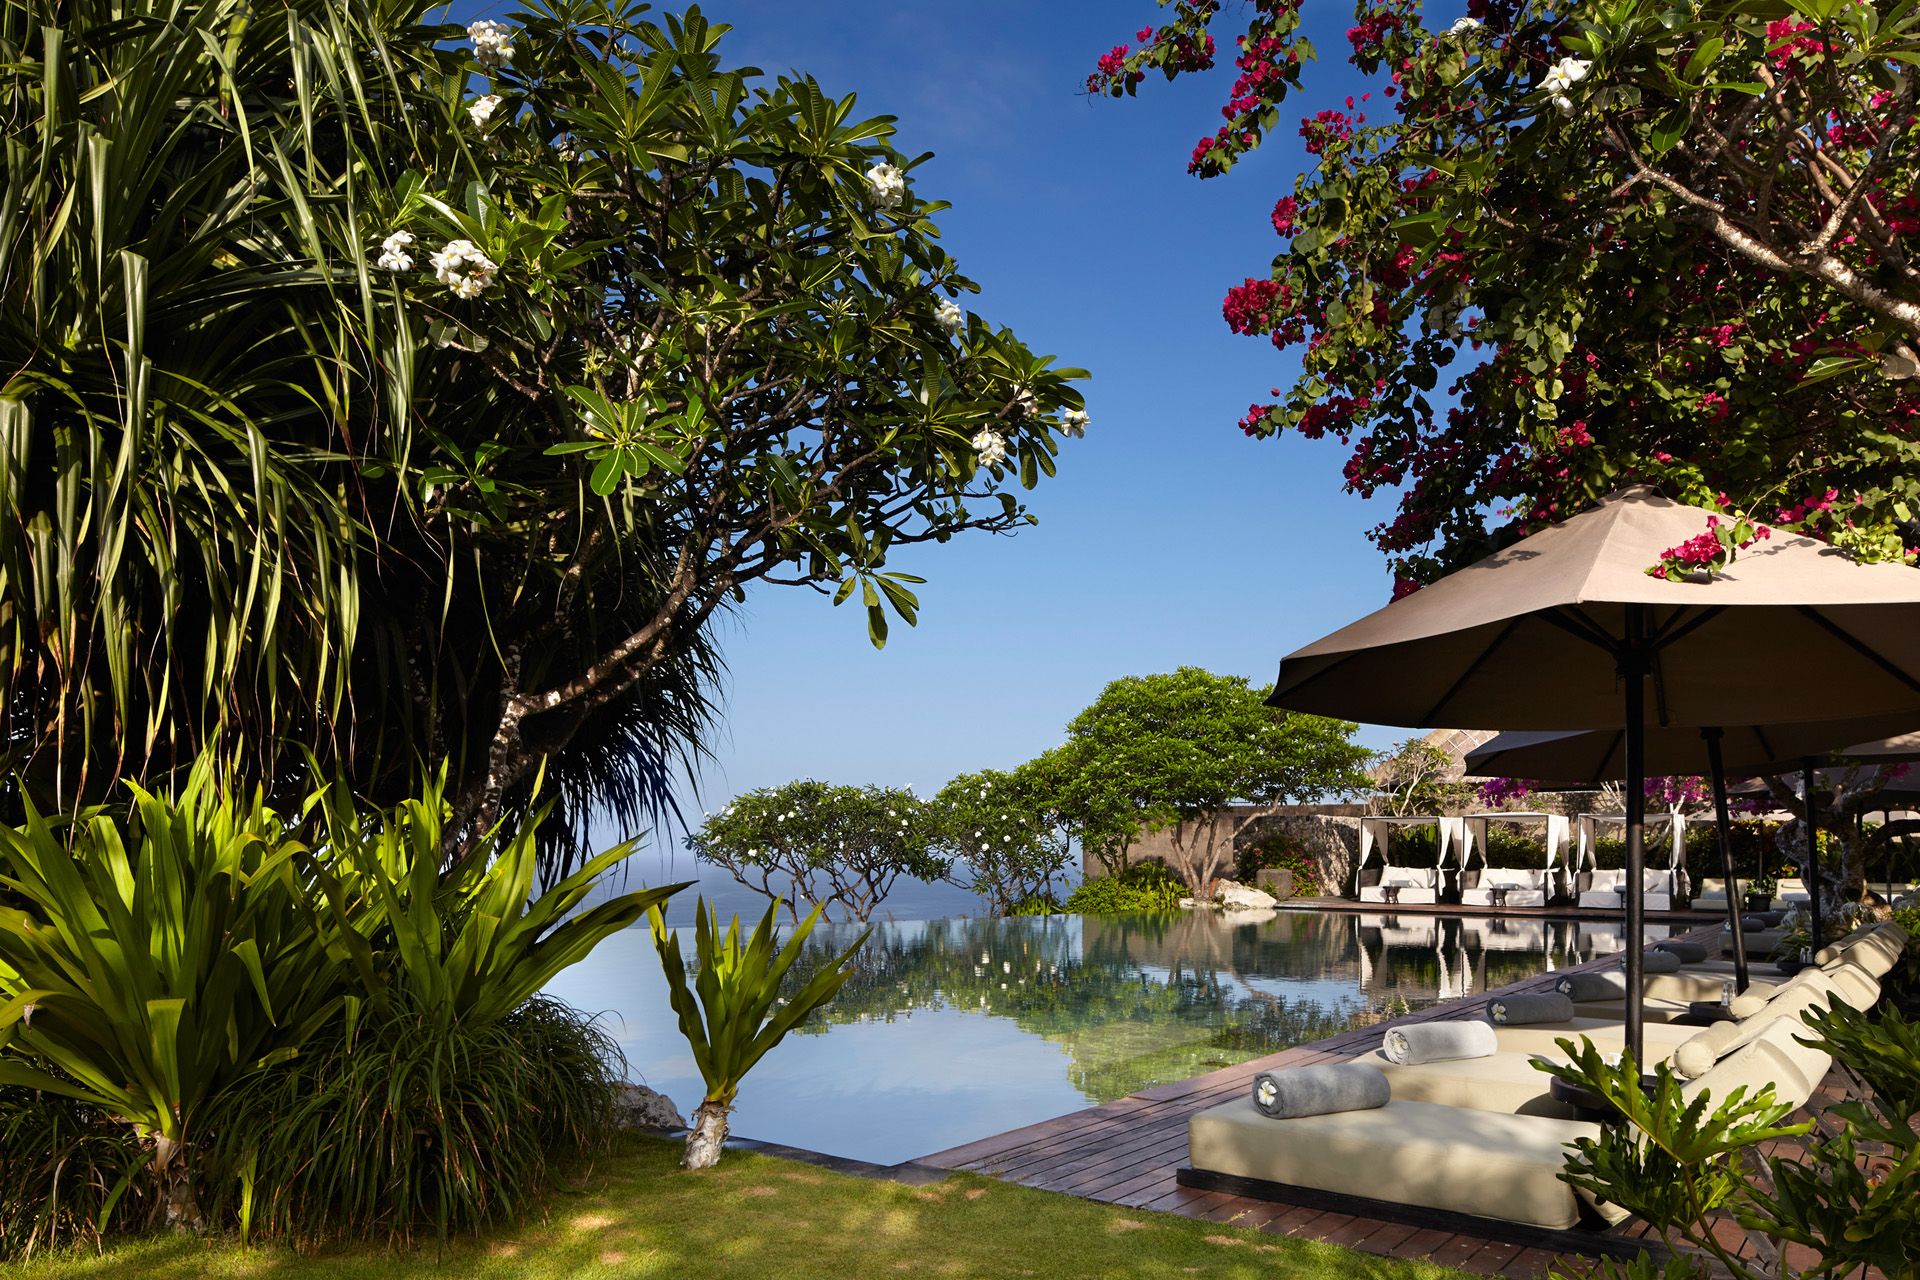 Bulgari Resort Bali, The cliff side pool